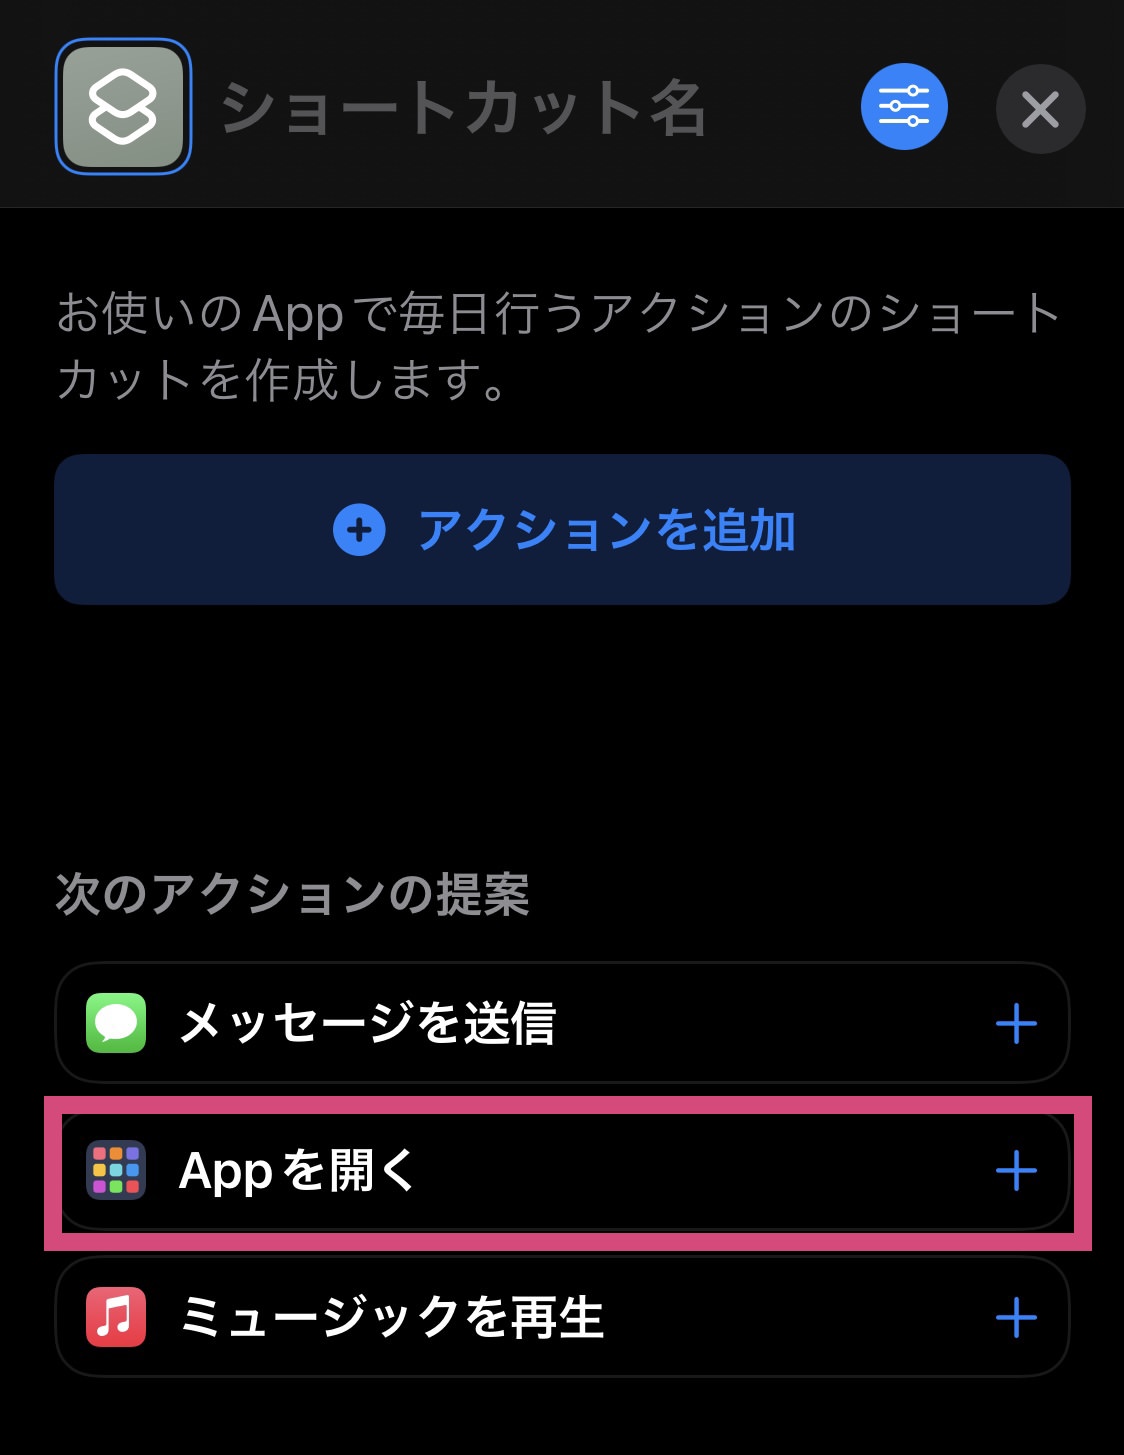 【Appを開く】を選択